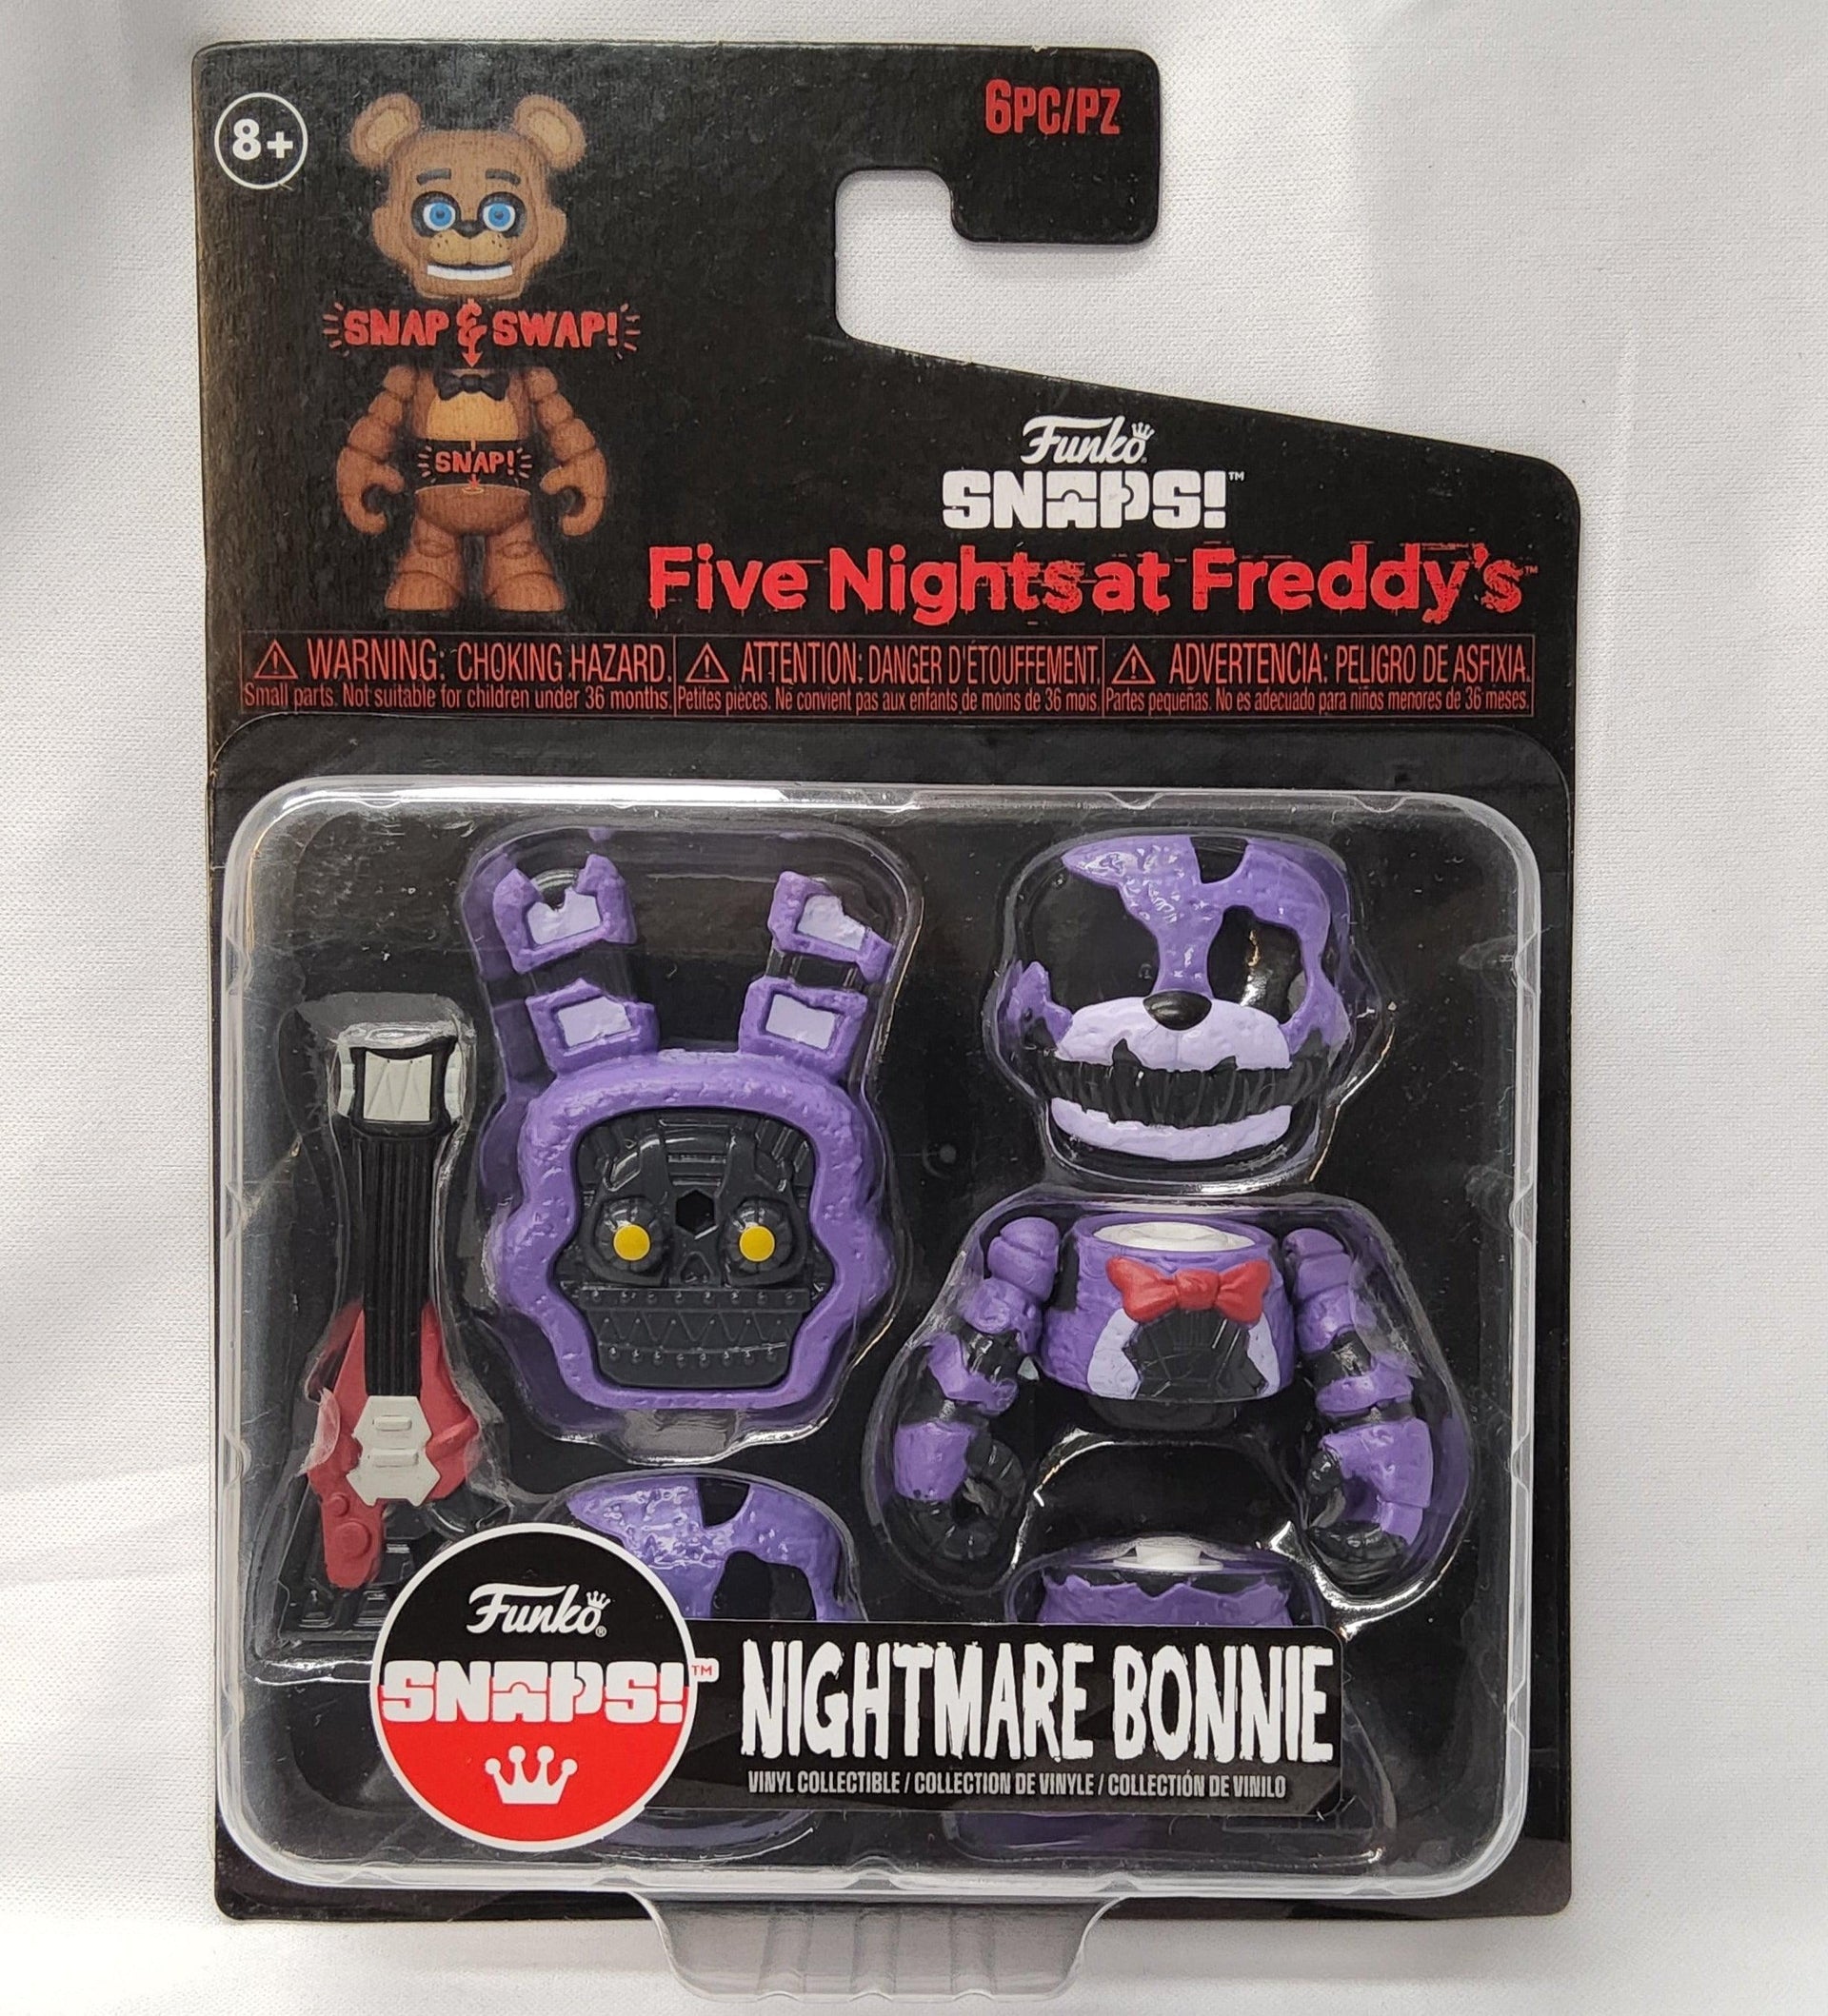 Five Nights at Freddy's Bonnie Vinyl Figure